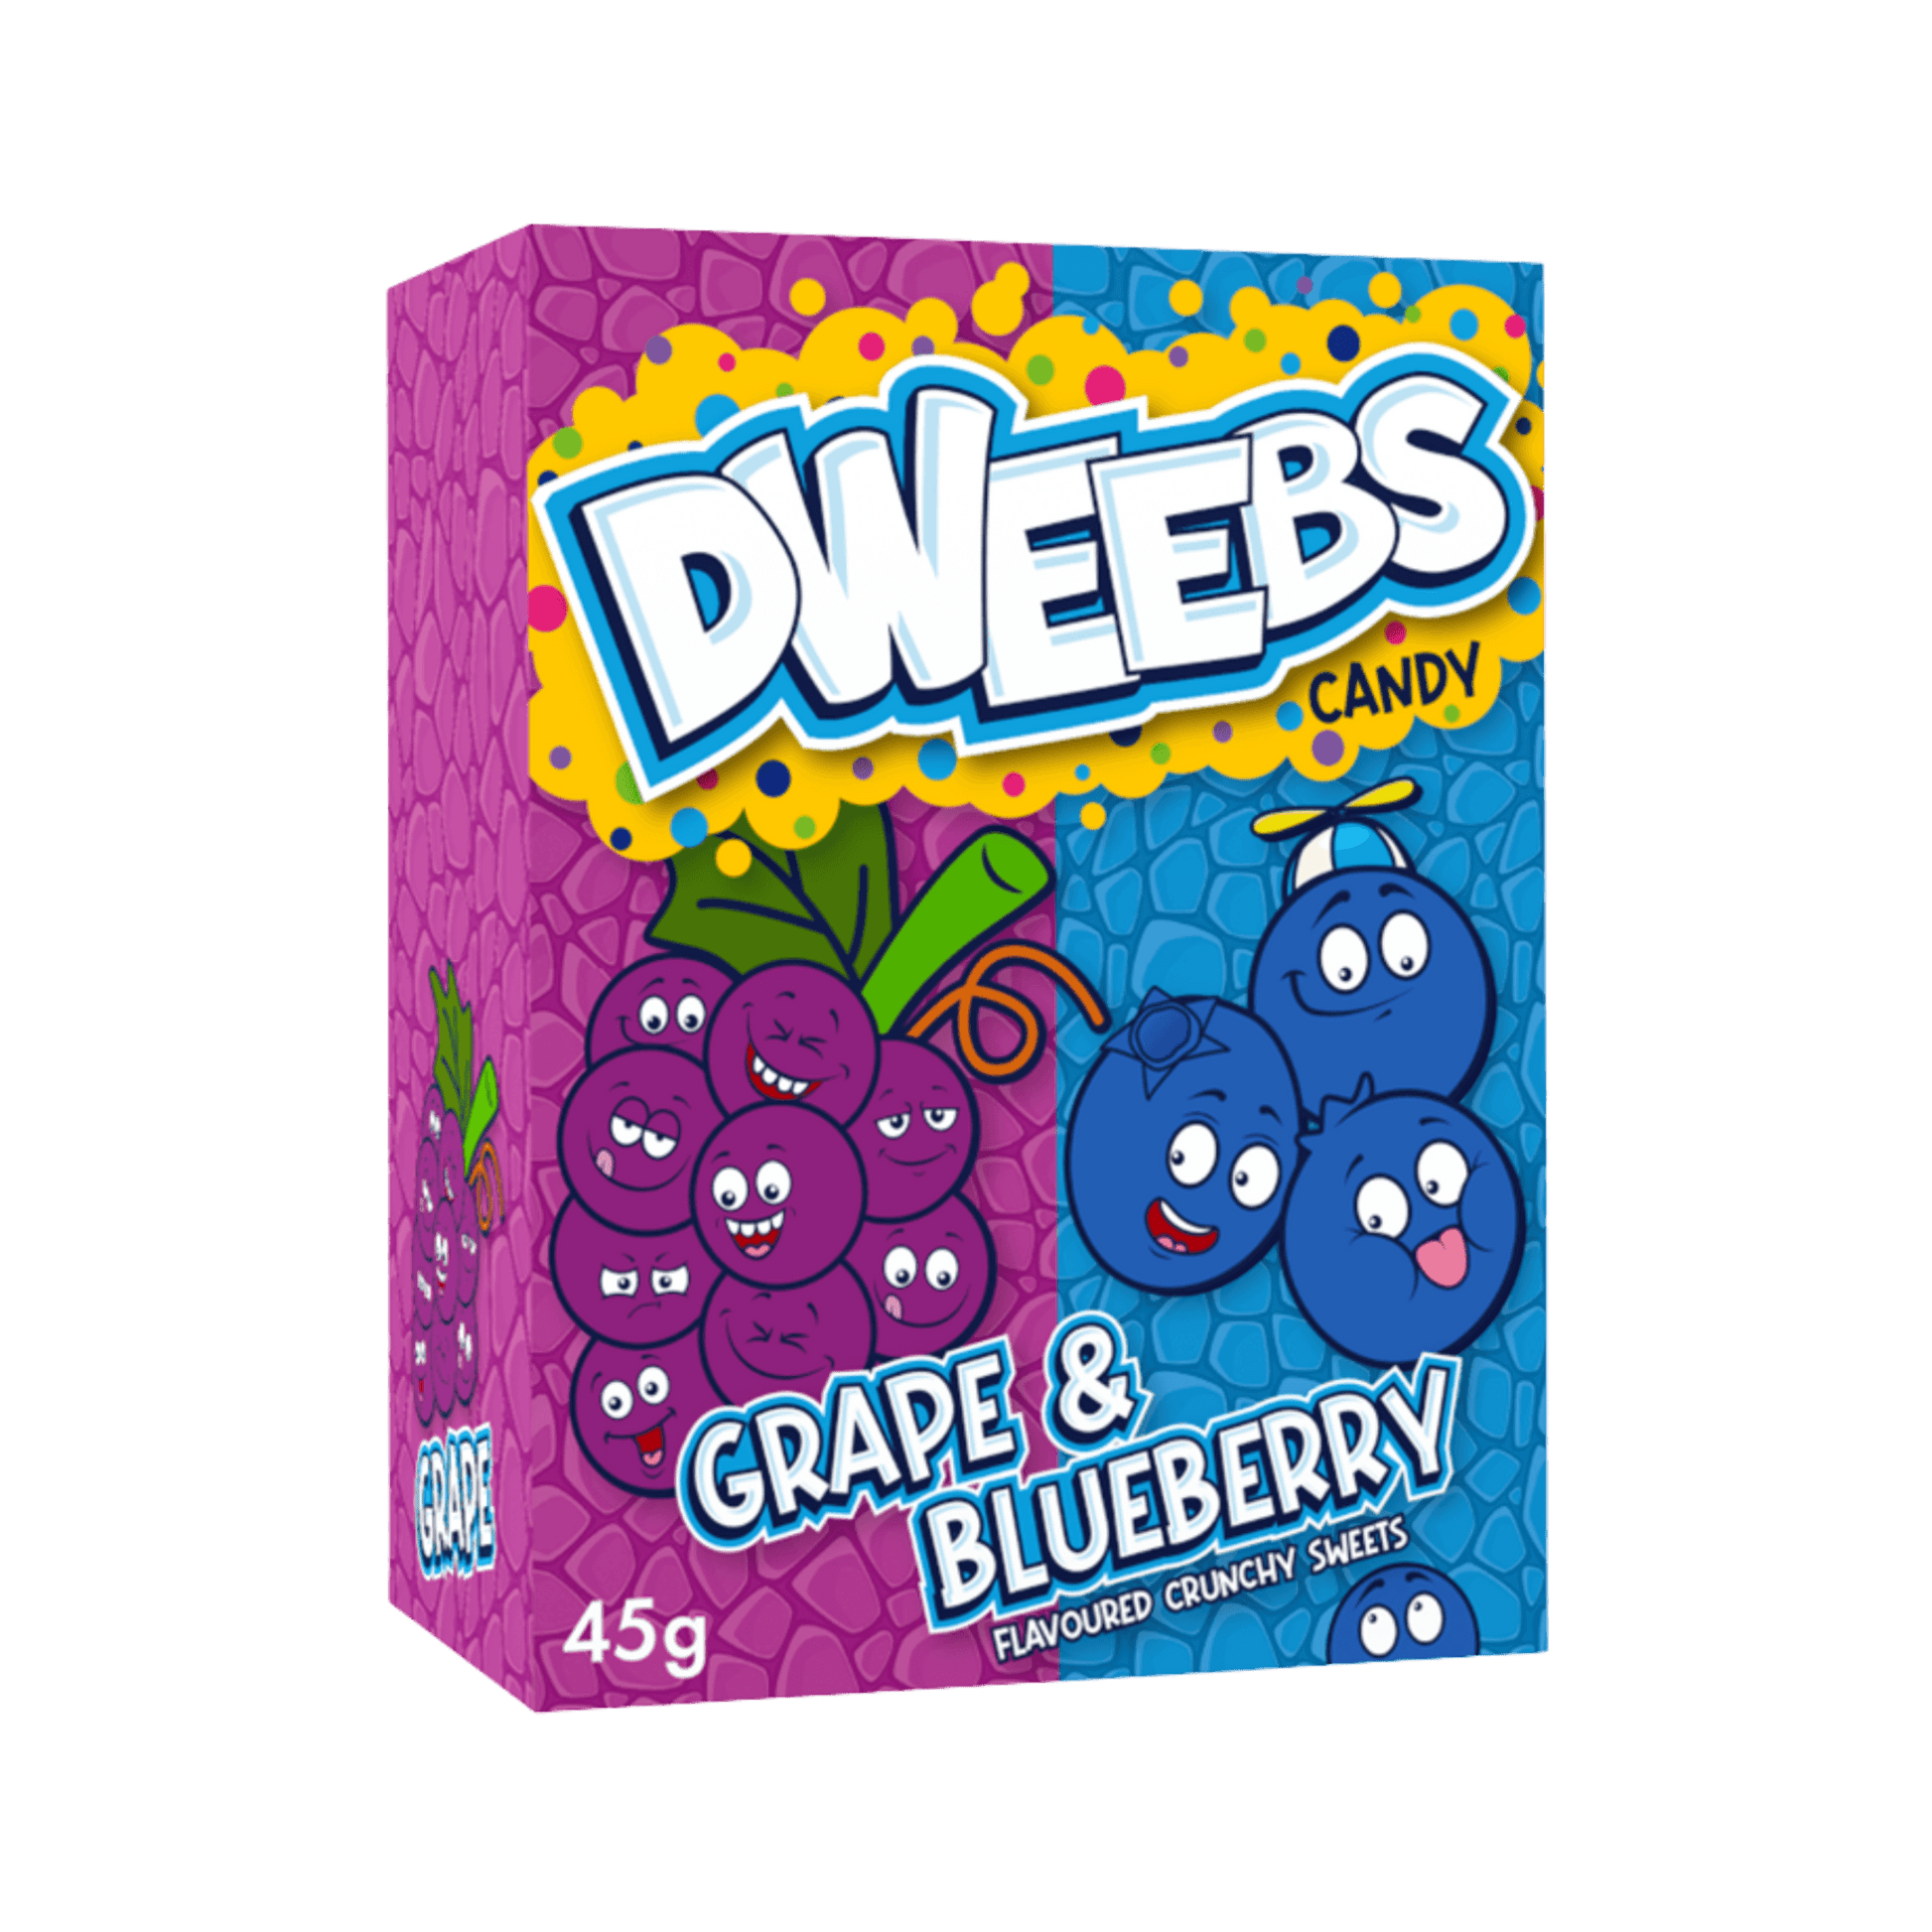 DWEEBS | Grape & Blueberry (45g) - Candy - Scran.ie